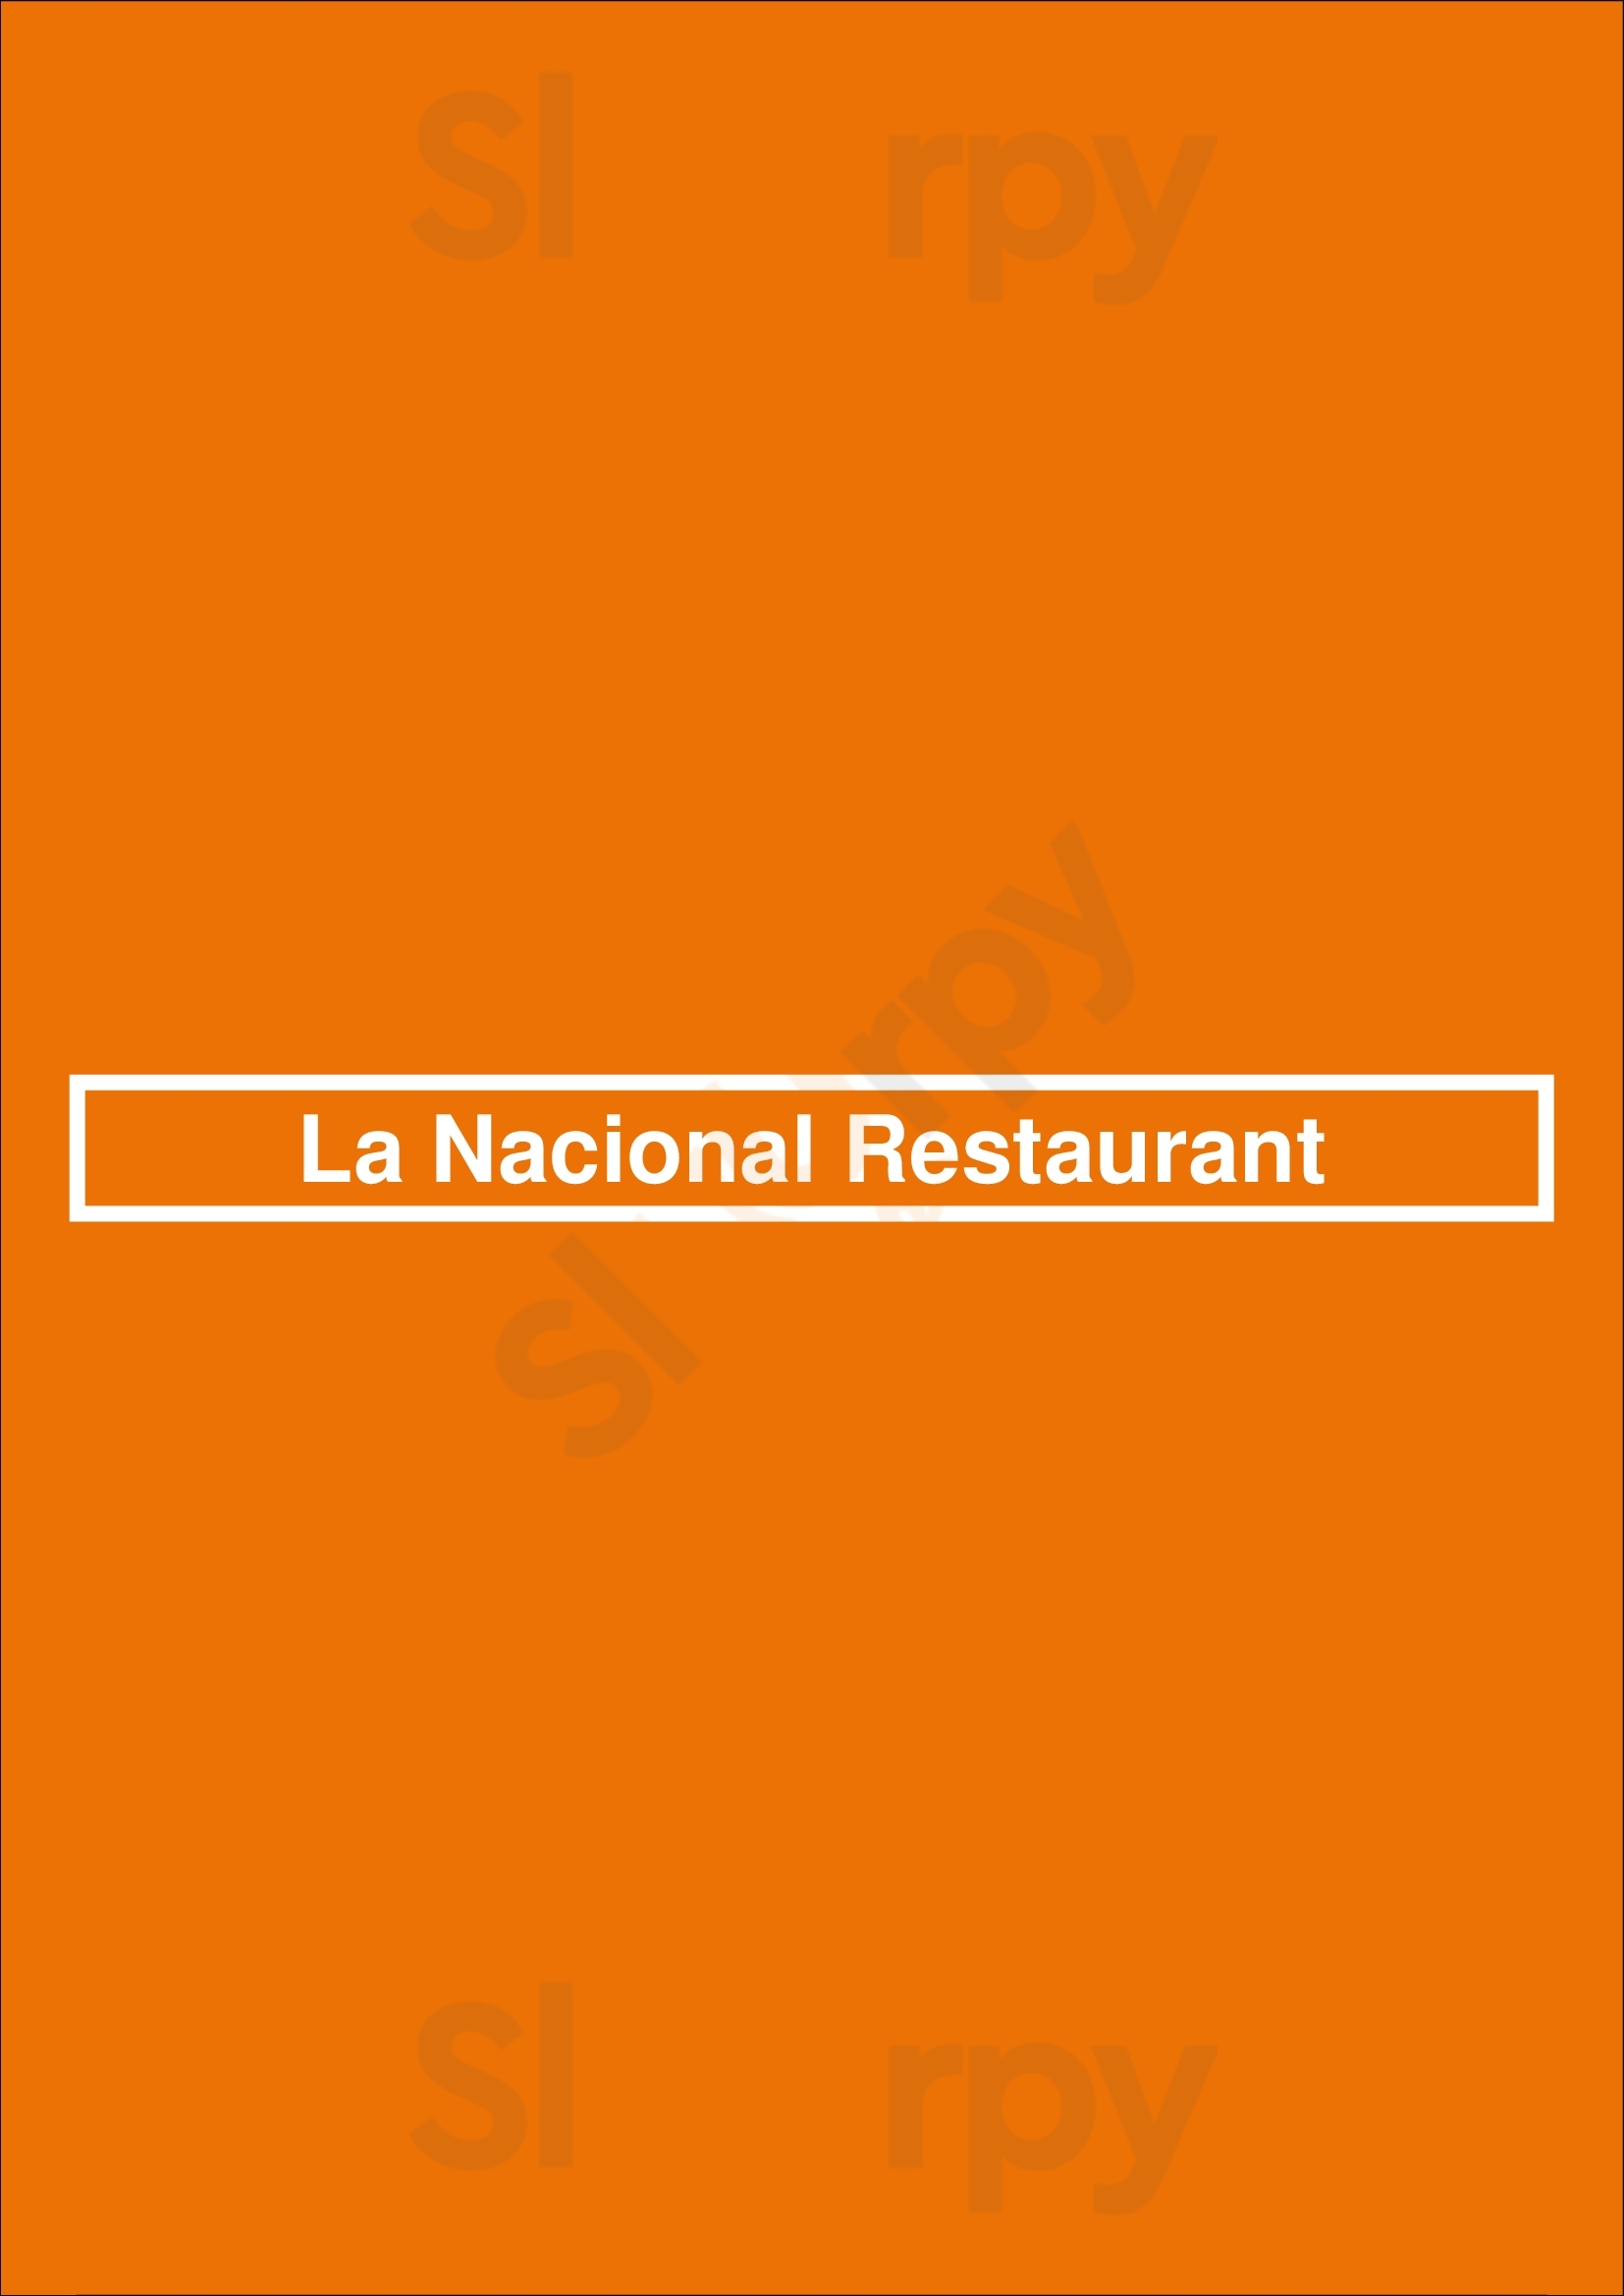 La Nacional Restaurant New York City Menu - 1